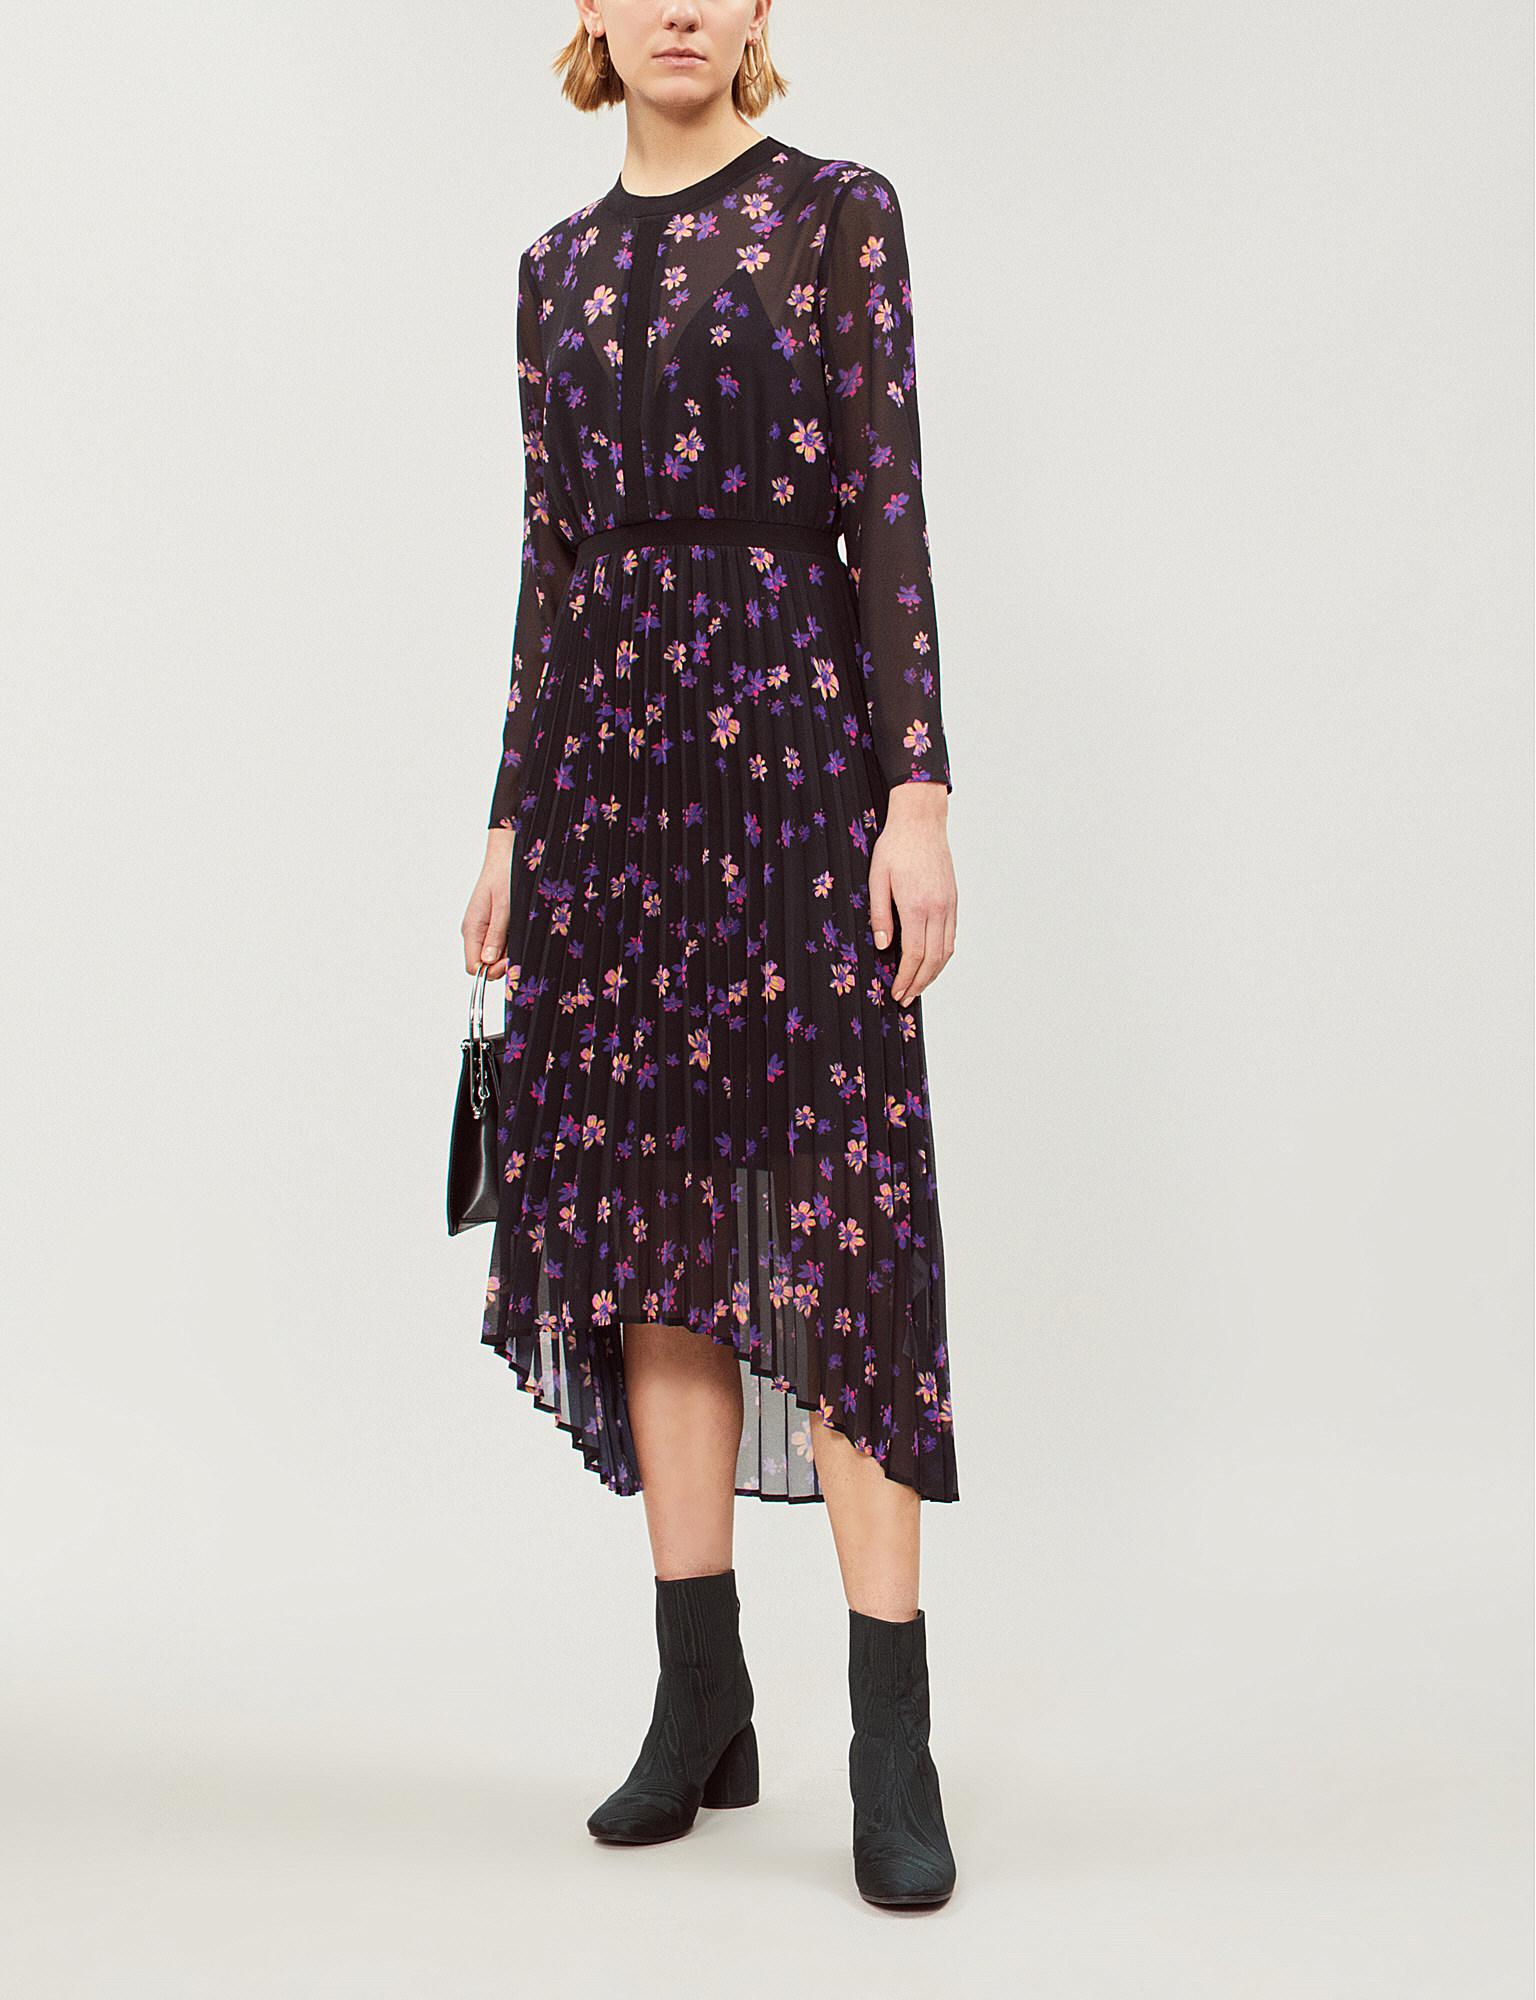 light purple lace dress